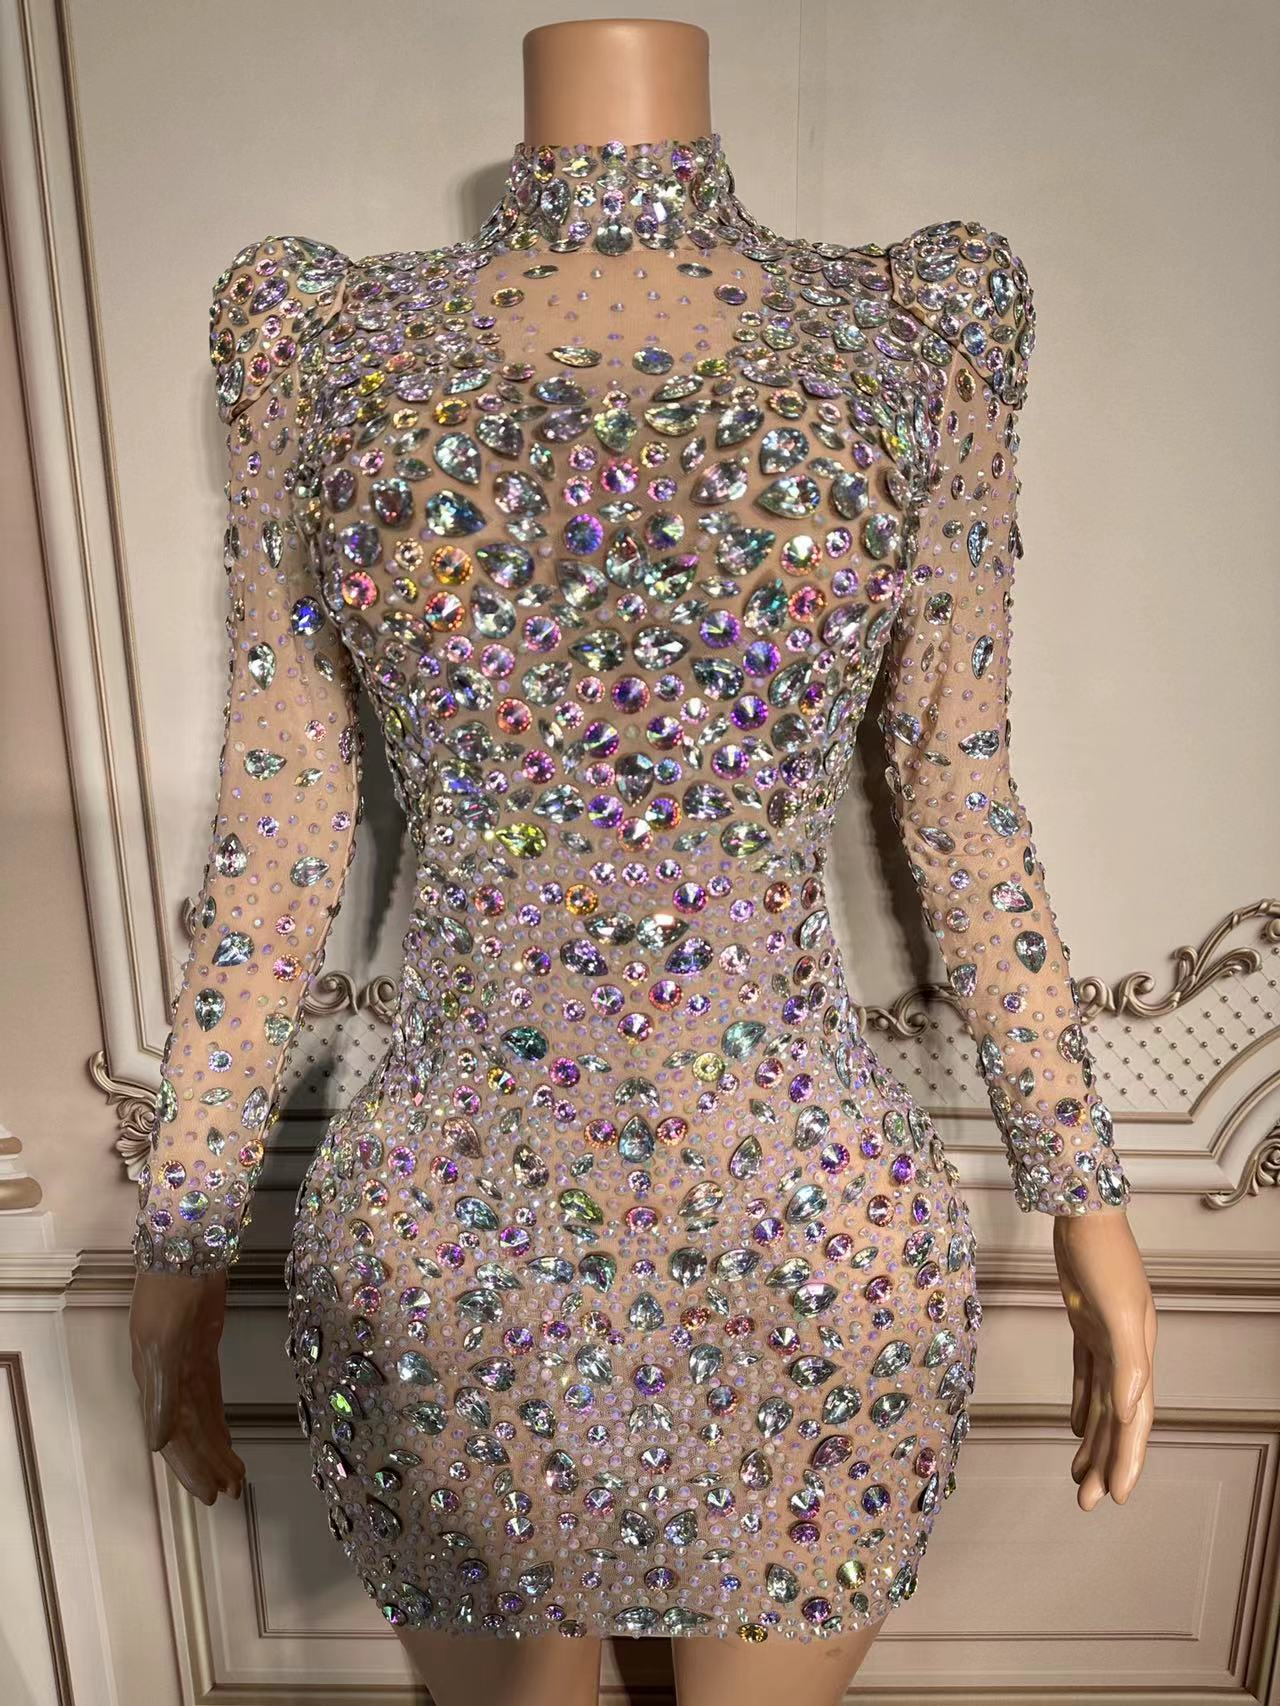 Sparkly AB Rhinestones Crystal Sexy Mesh See Through Short Dress Prom